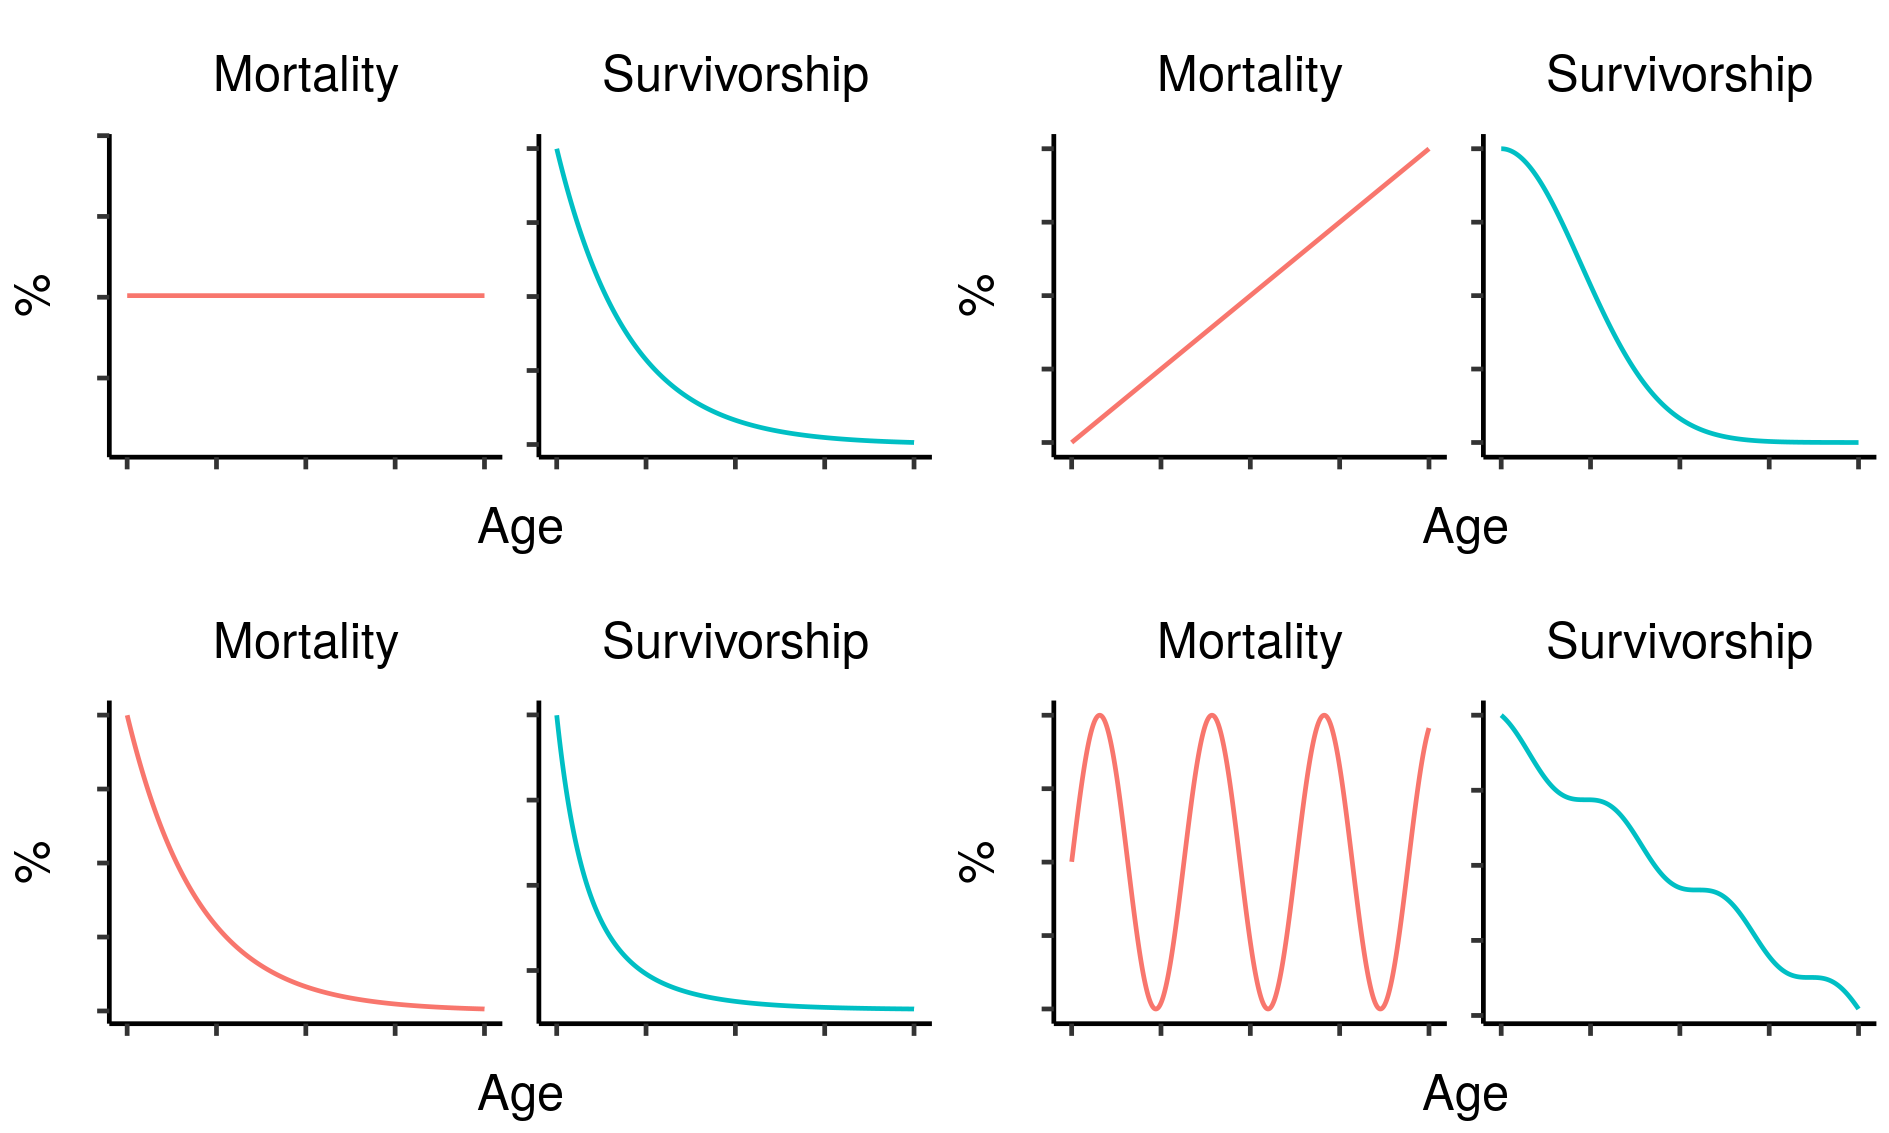 Four hypothetical mortality curves and their corresponding survivorship curves